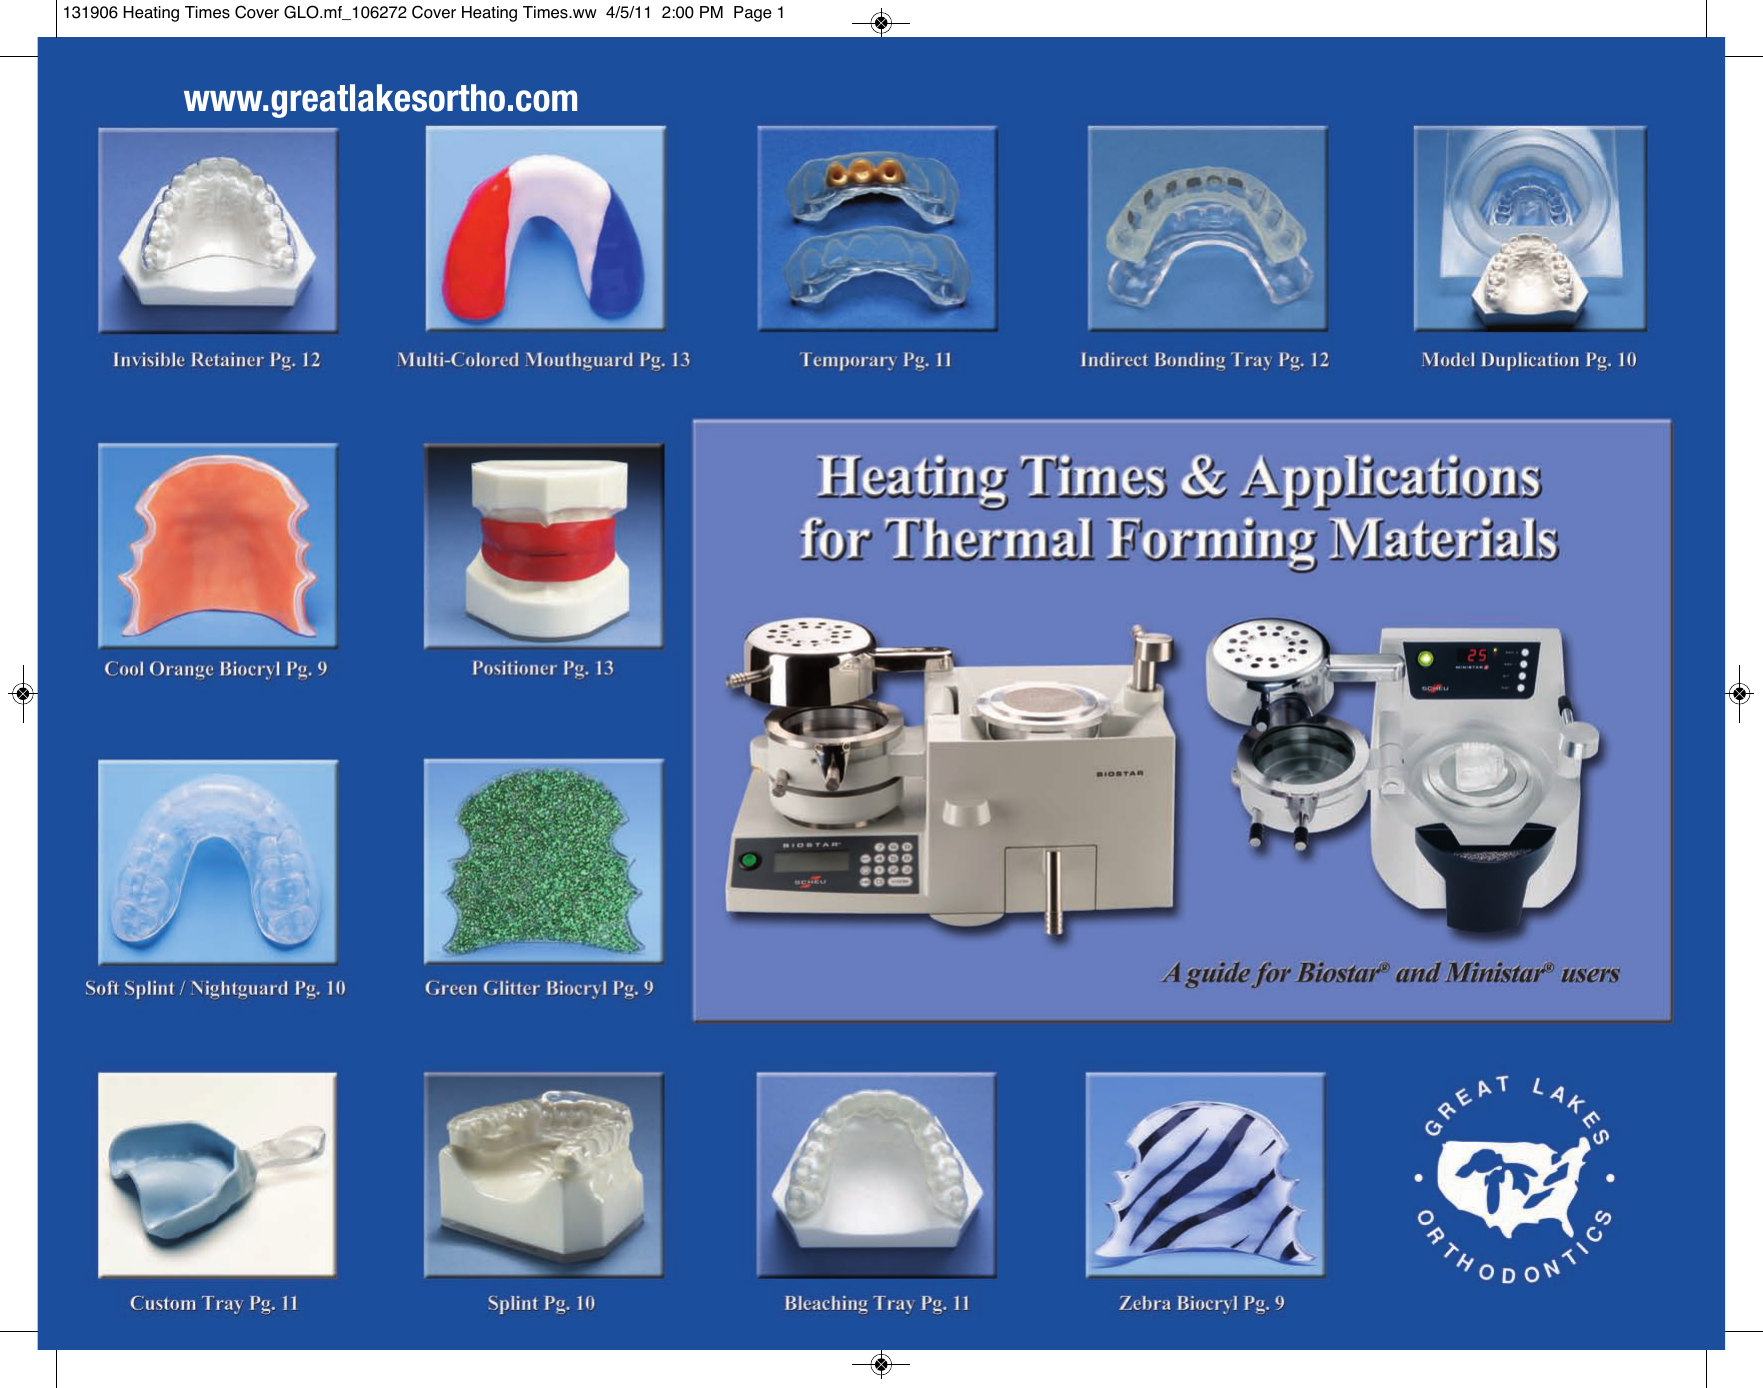 Biostar/Ministar Heating Times Guide | Manualzz